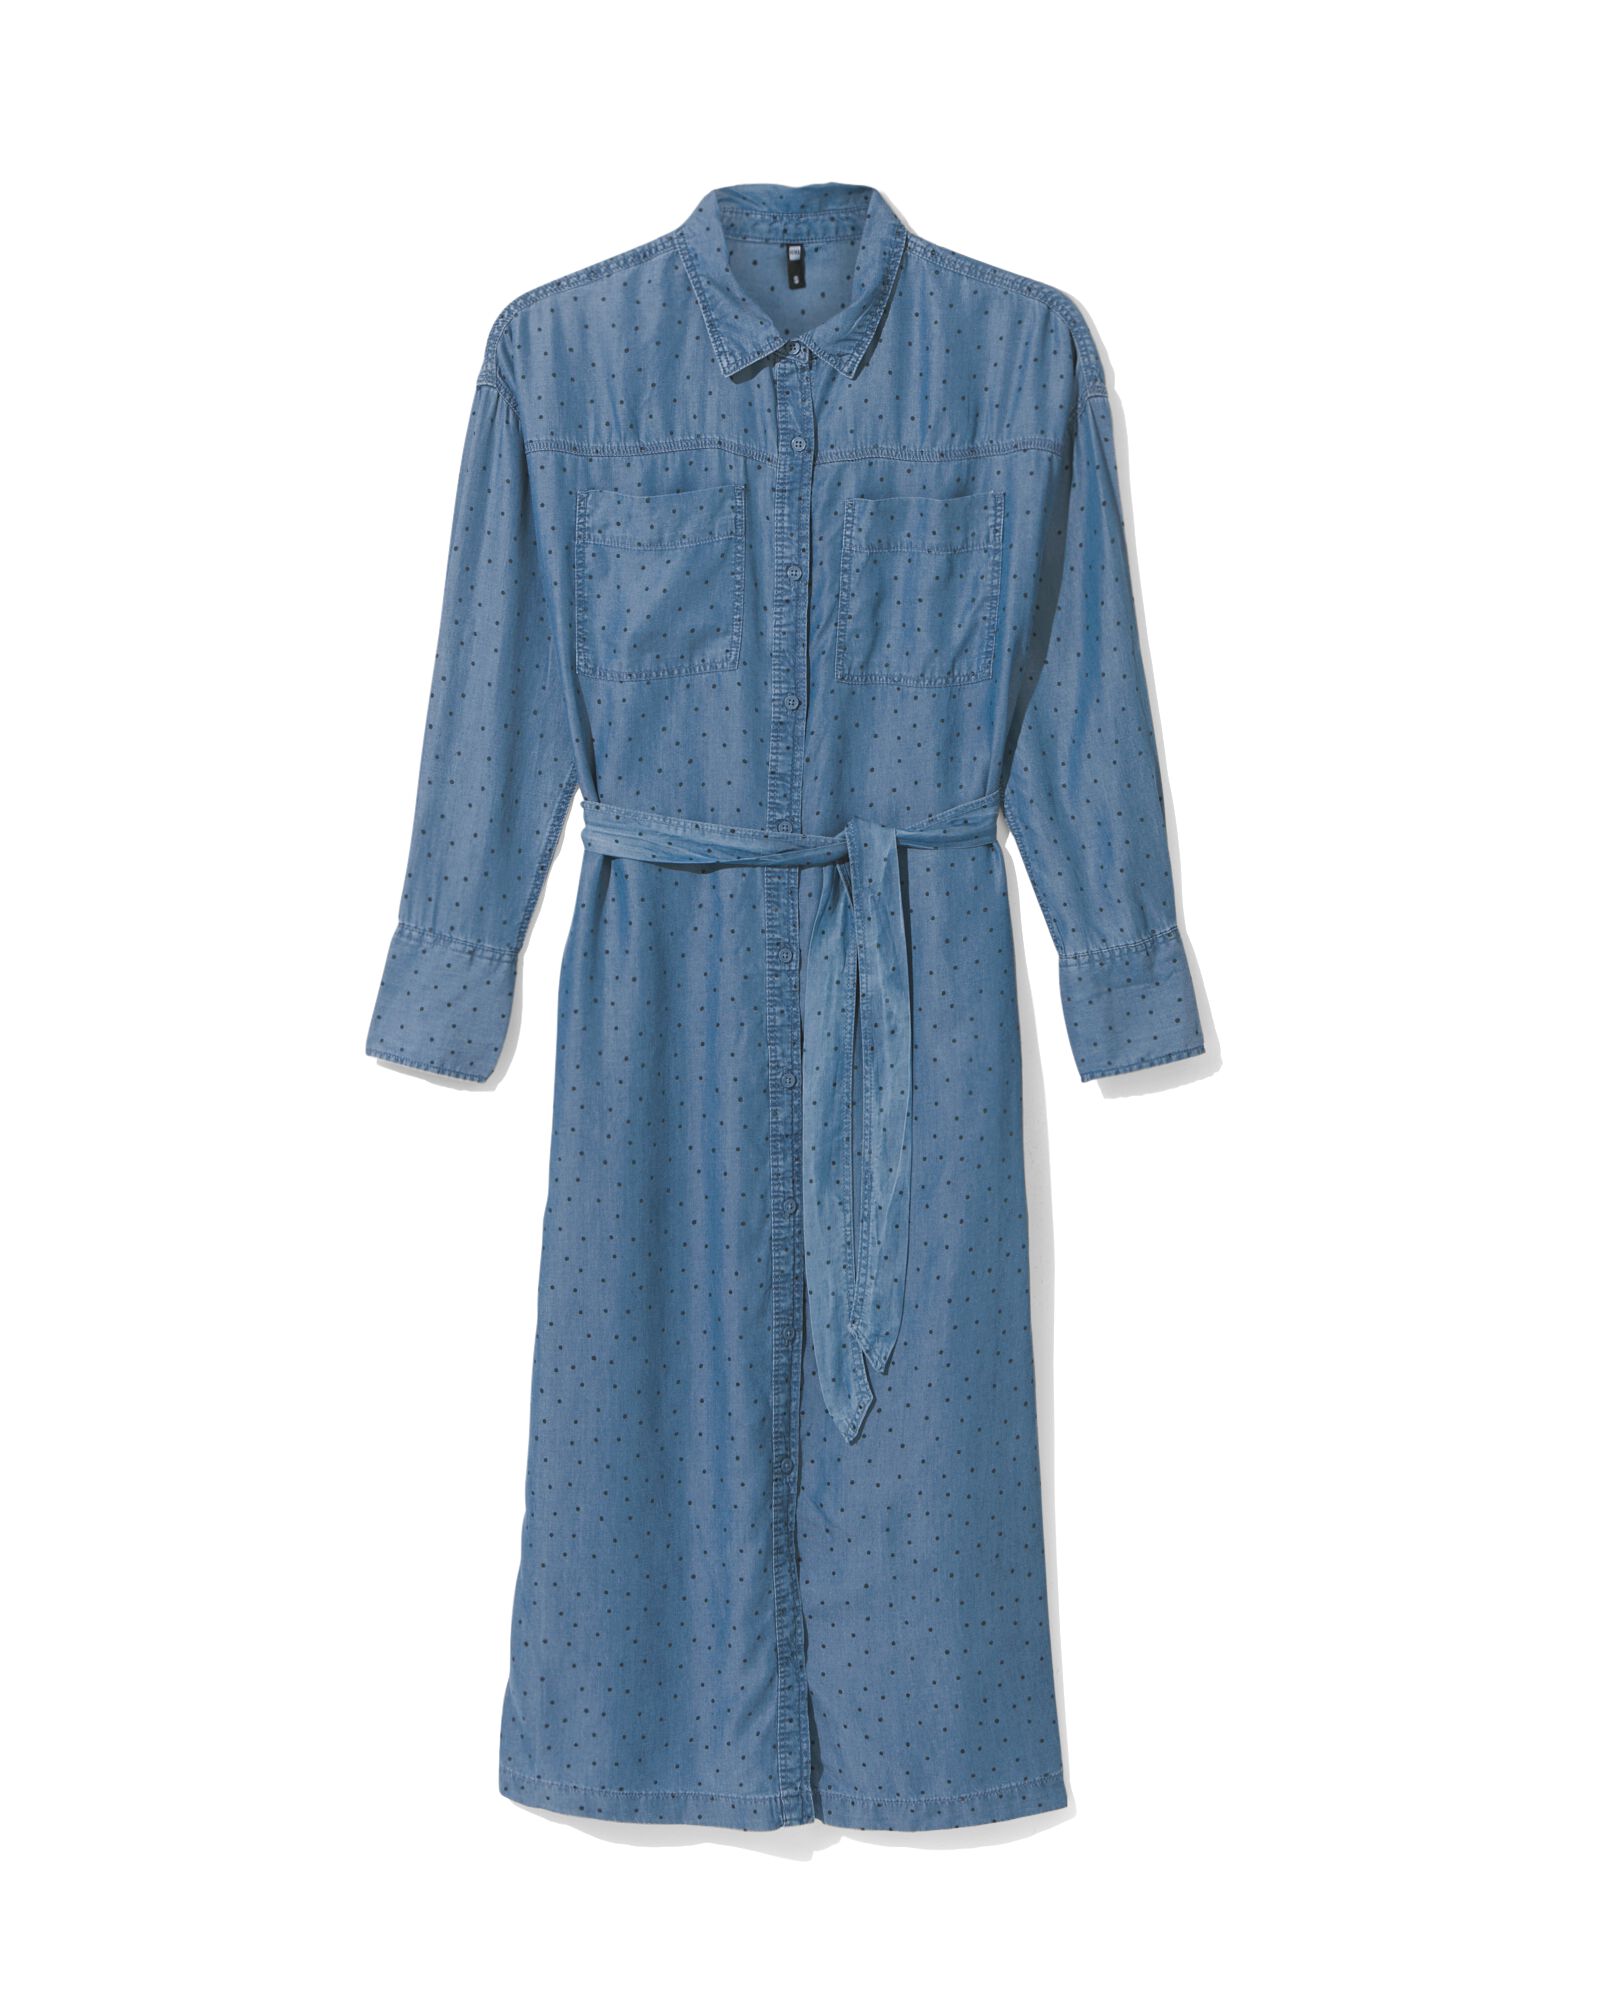 robe boutonnée femme Ilana bleu bleu - 36297225BLUE - HEMA